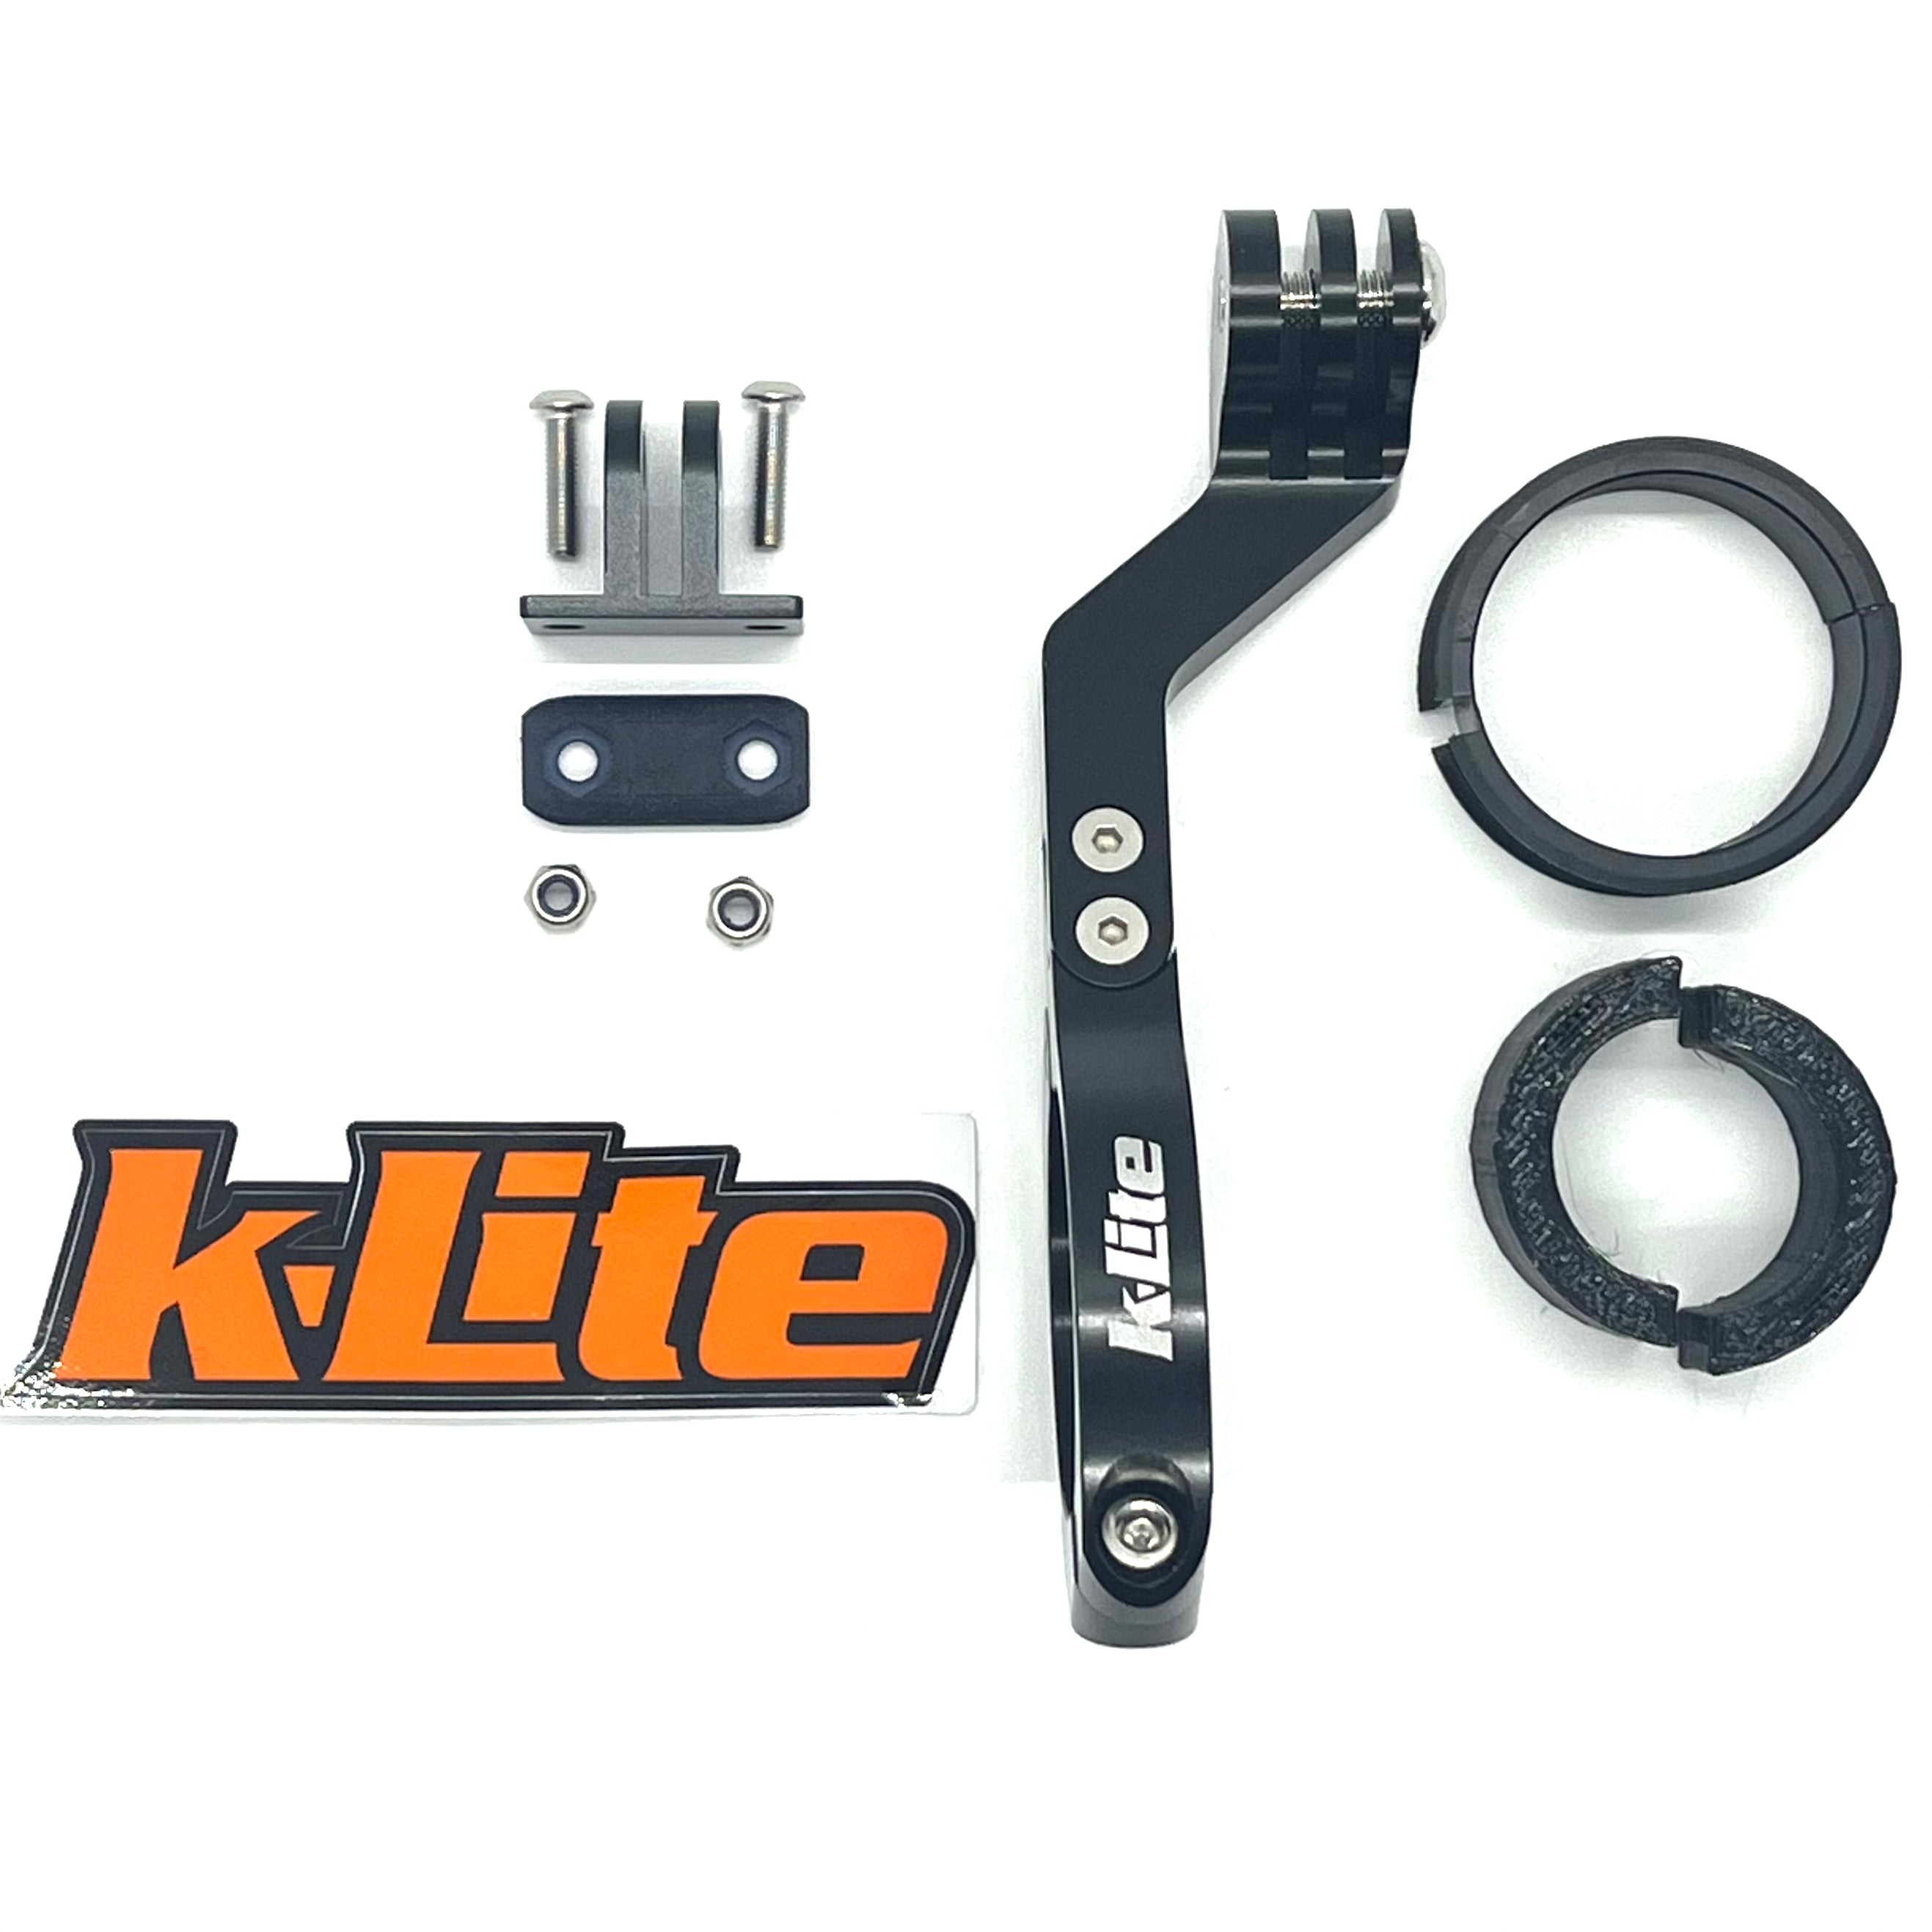 klite-handlebar-mount-replacement-kit-current-design